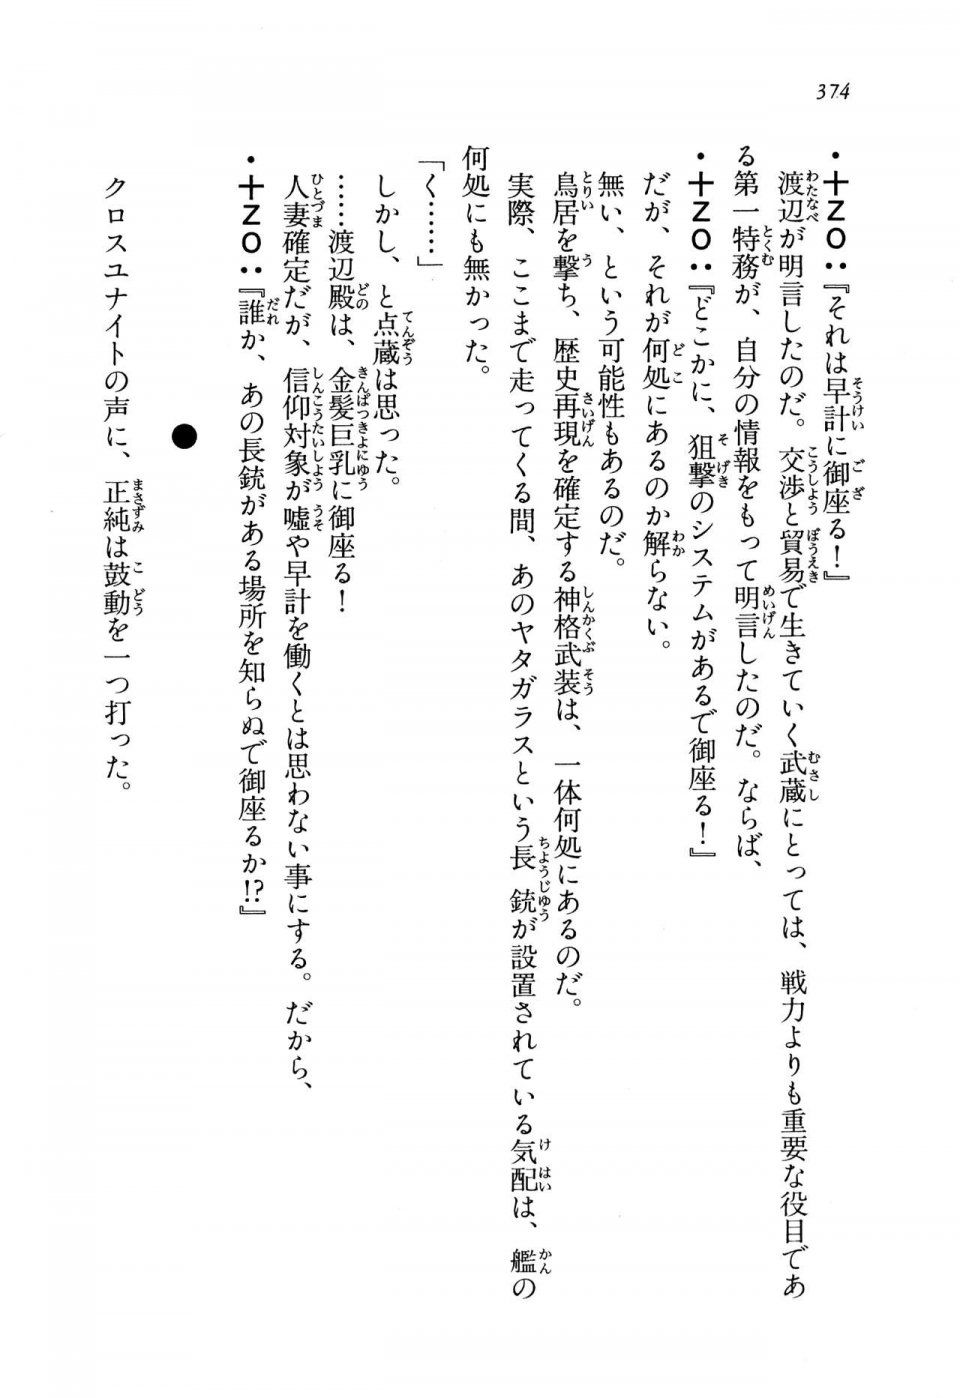 Kyoukai Senjou no Horizon BD Special Mininovel Vol 8(4B) - Photo #378